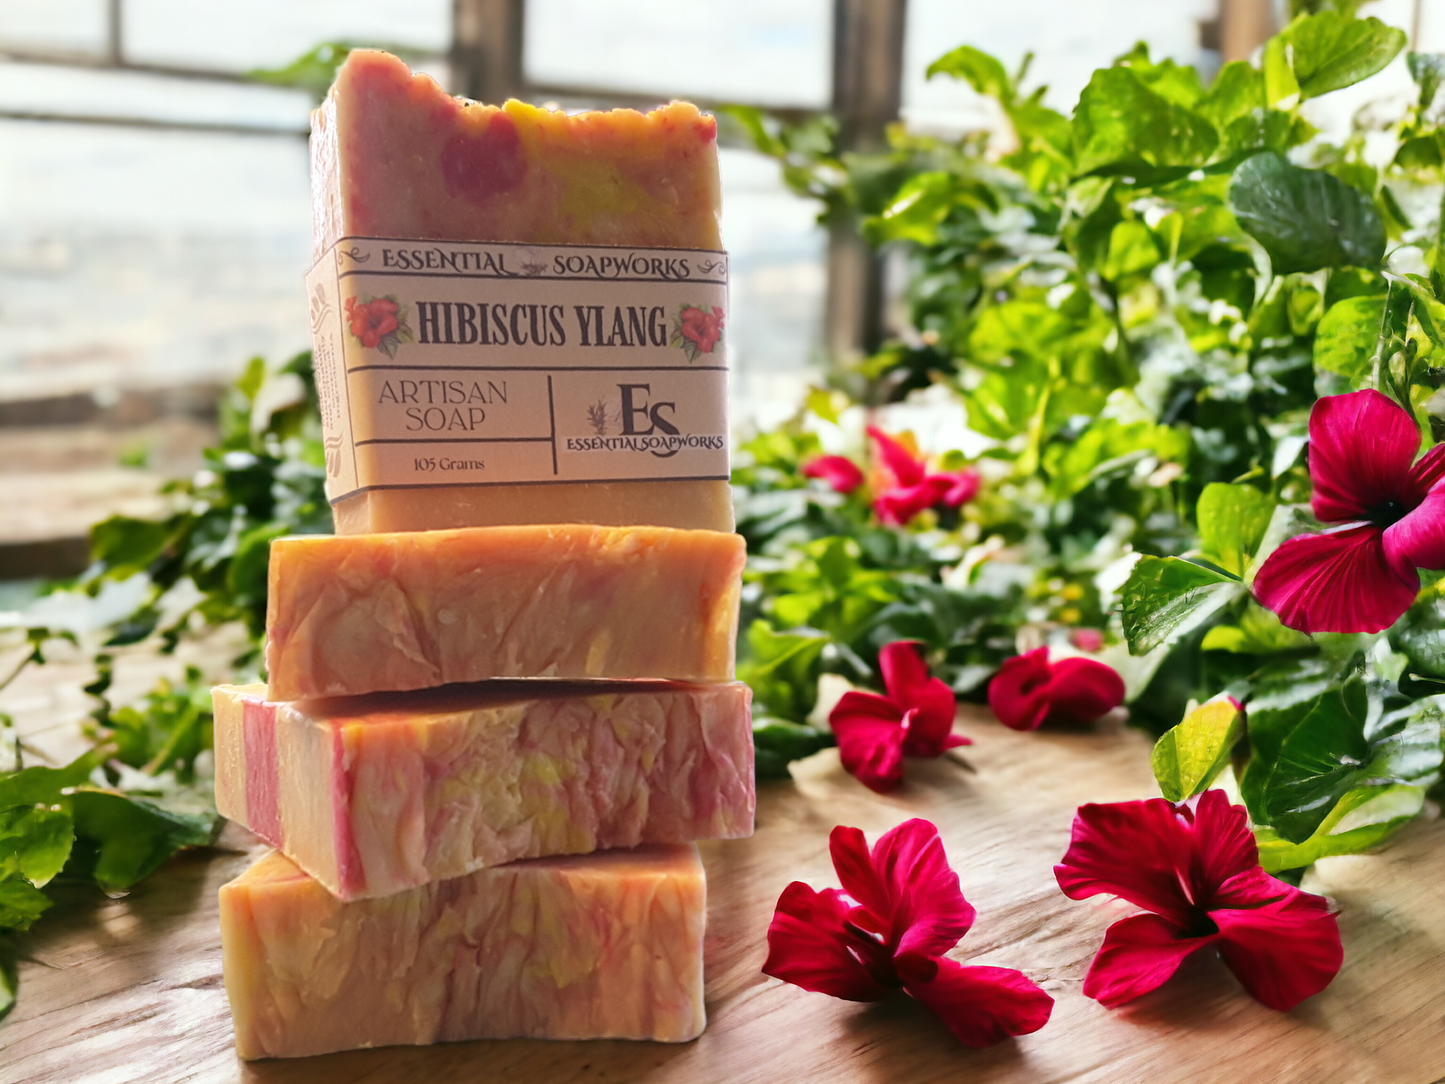 Hibiscus Ylang Soap